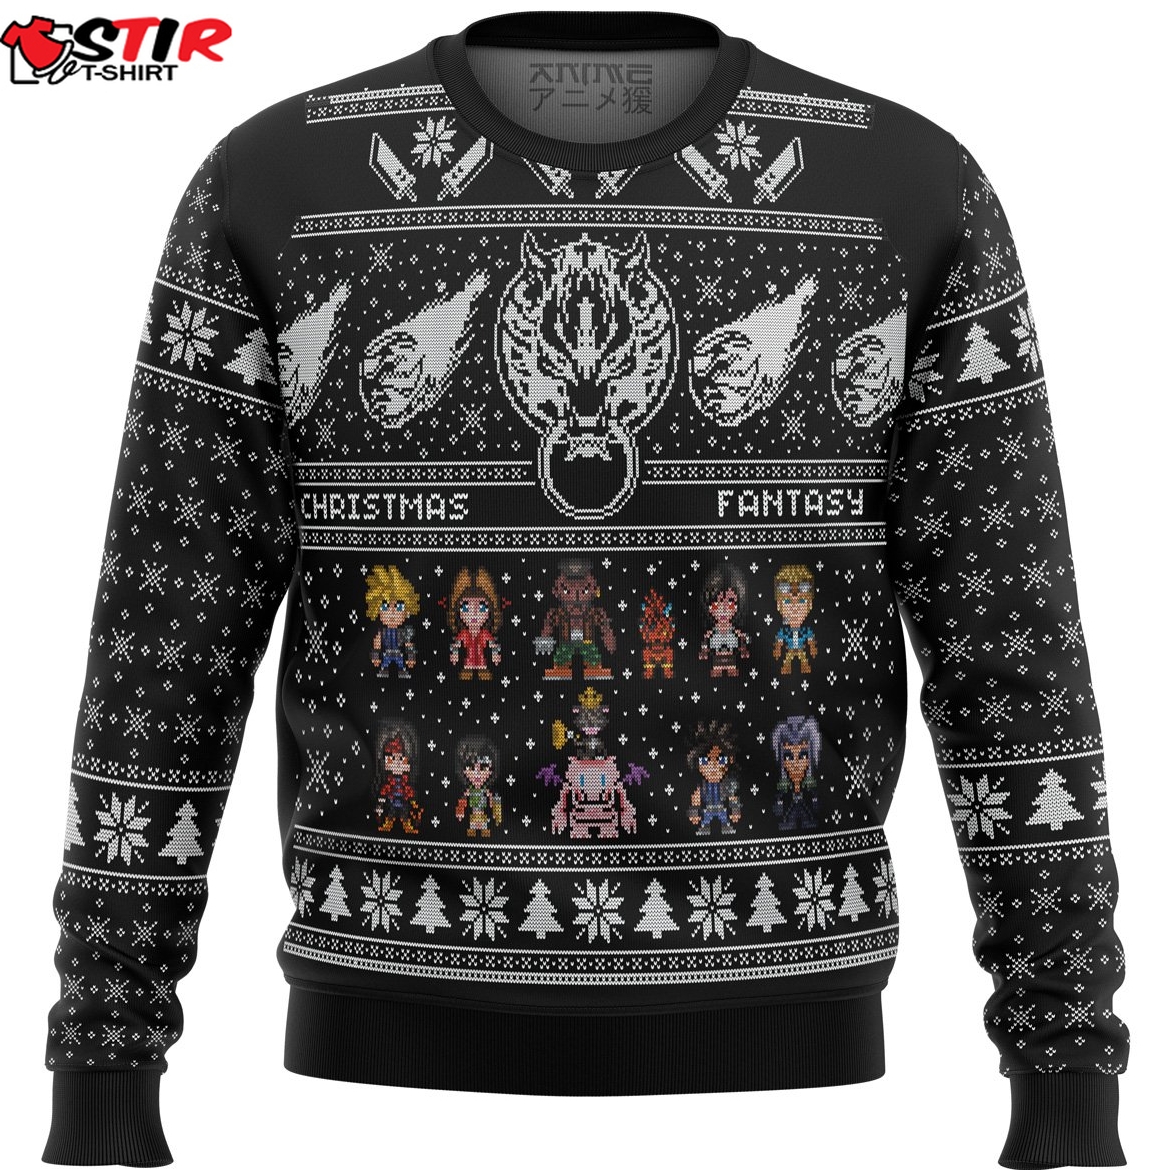 Final Fantasy 7 Vii Ff7 Ugly Christmas Sweater Stirtshirt